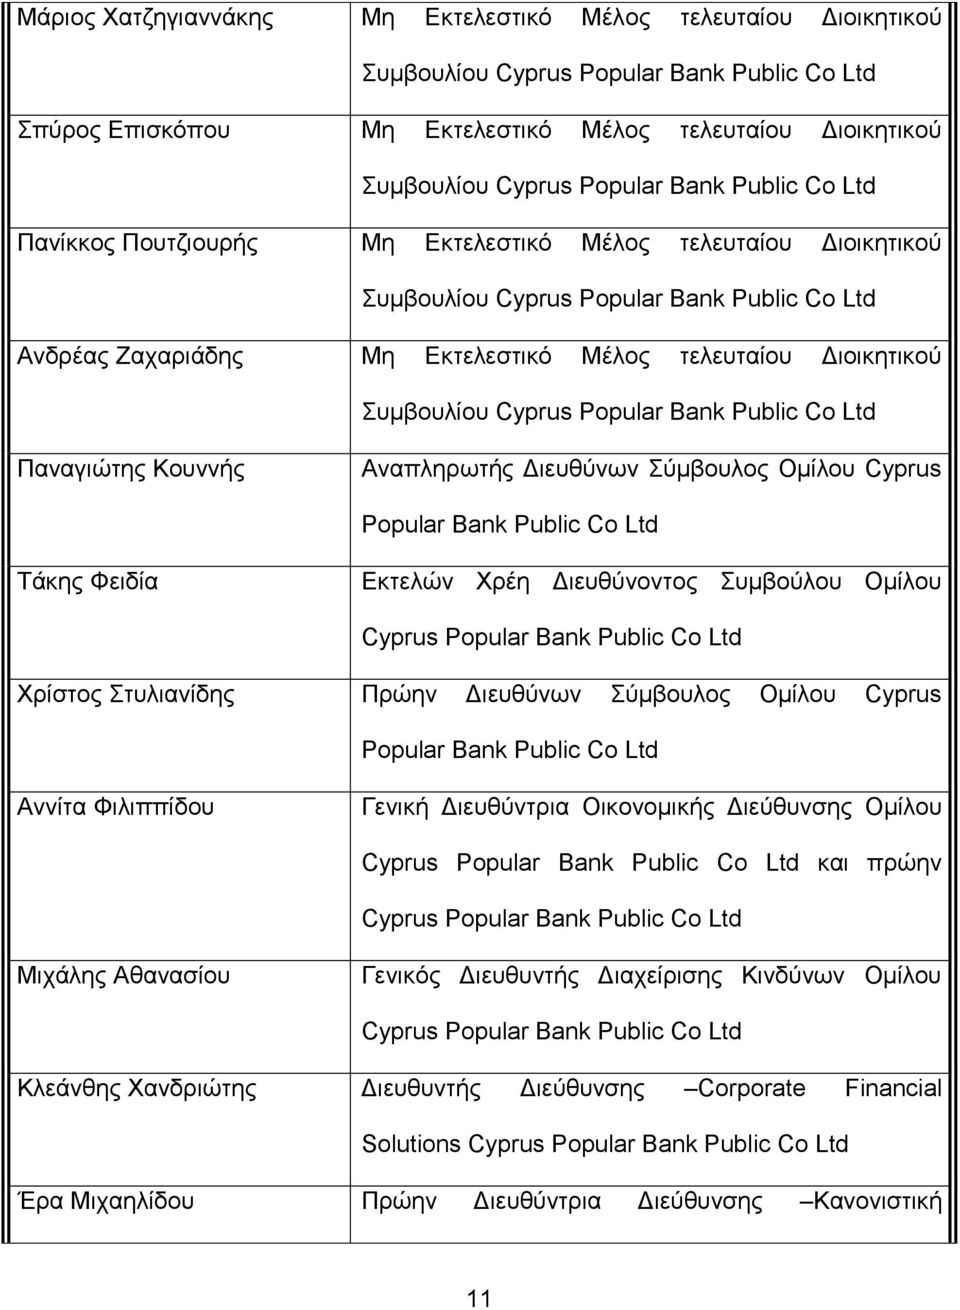 Cyprus Popular Bank Public Co Ltd Παλαγηώηεο Κνπλλήο Αλαπιεξσηήο Γηεπζύλσλ ύκβνπινο Οκίινπ Cyprus Popular Bank Public Co Ltd Σάθεο Φεηδία Δθηειώλ Υξέε Γηεπζύλνληνο πκβνύινπ Οκίινπ Cyprus Popular Bank